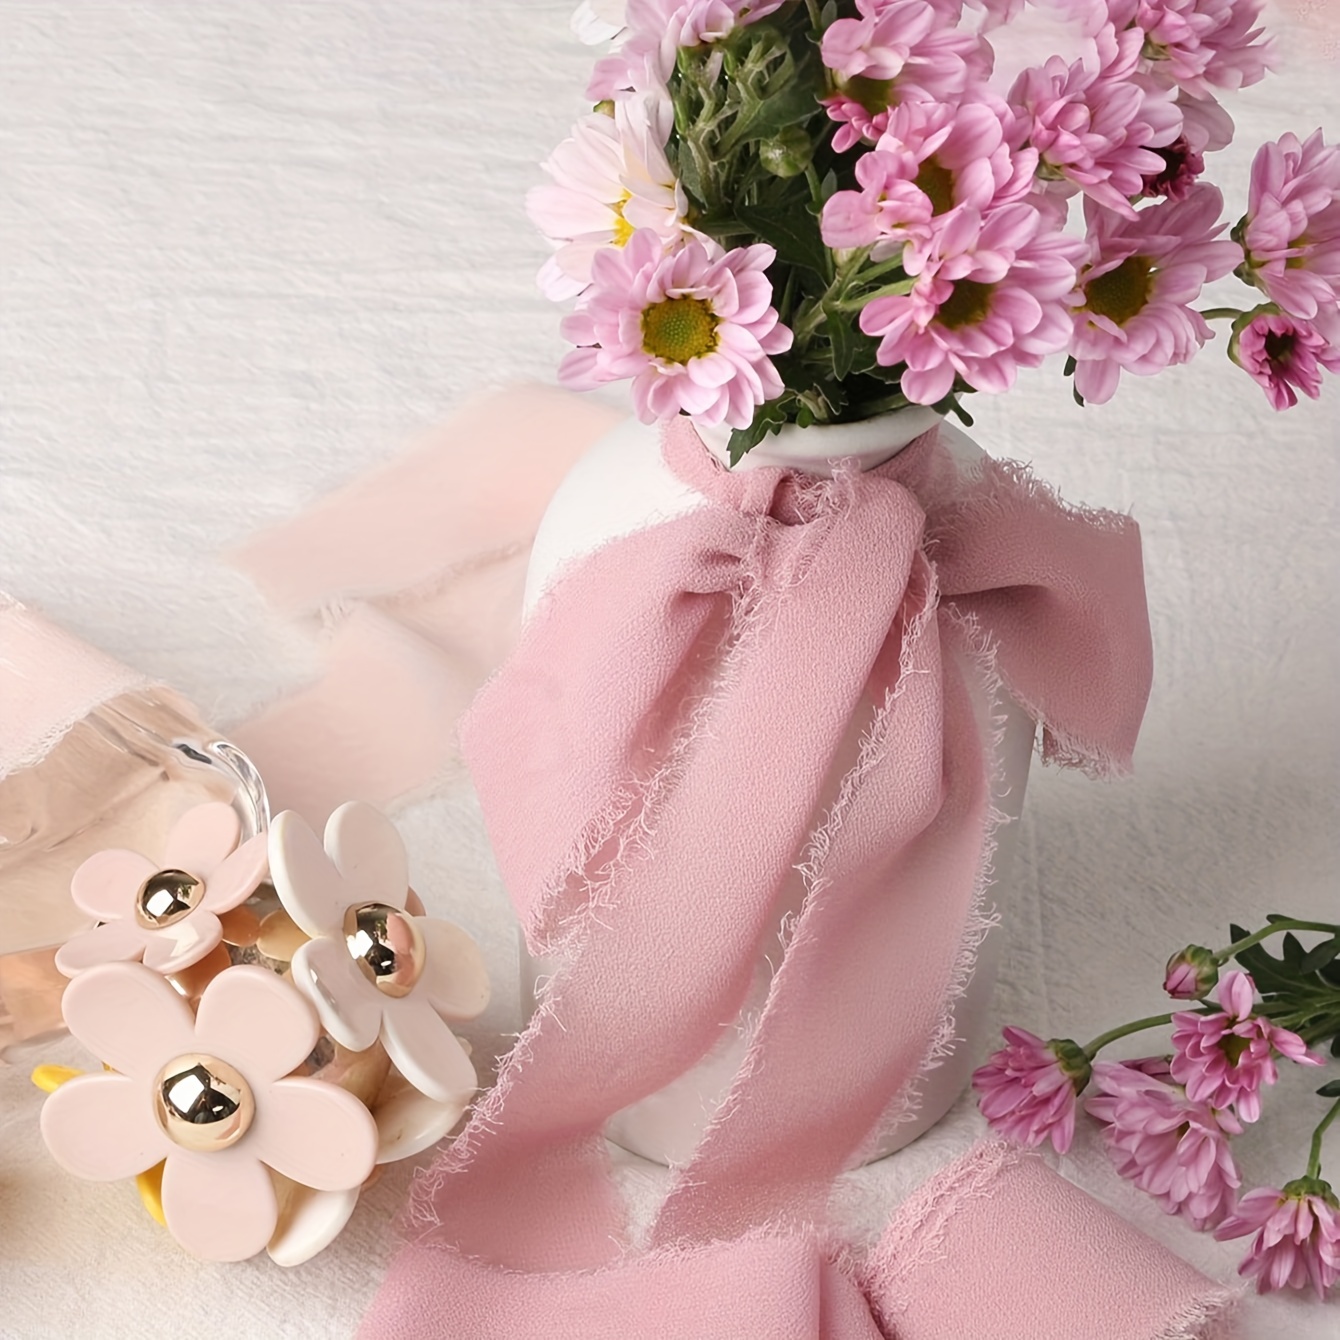 Blush Pink Chiffon Ribbon 3 Rolls Frayed Chiffon Silk Ribbons for Bouquets, Wedding, Gift Wrapping 2x 5.5 yd